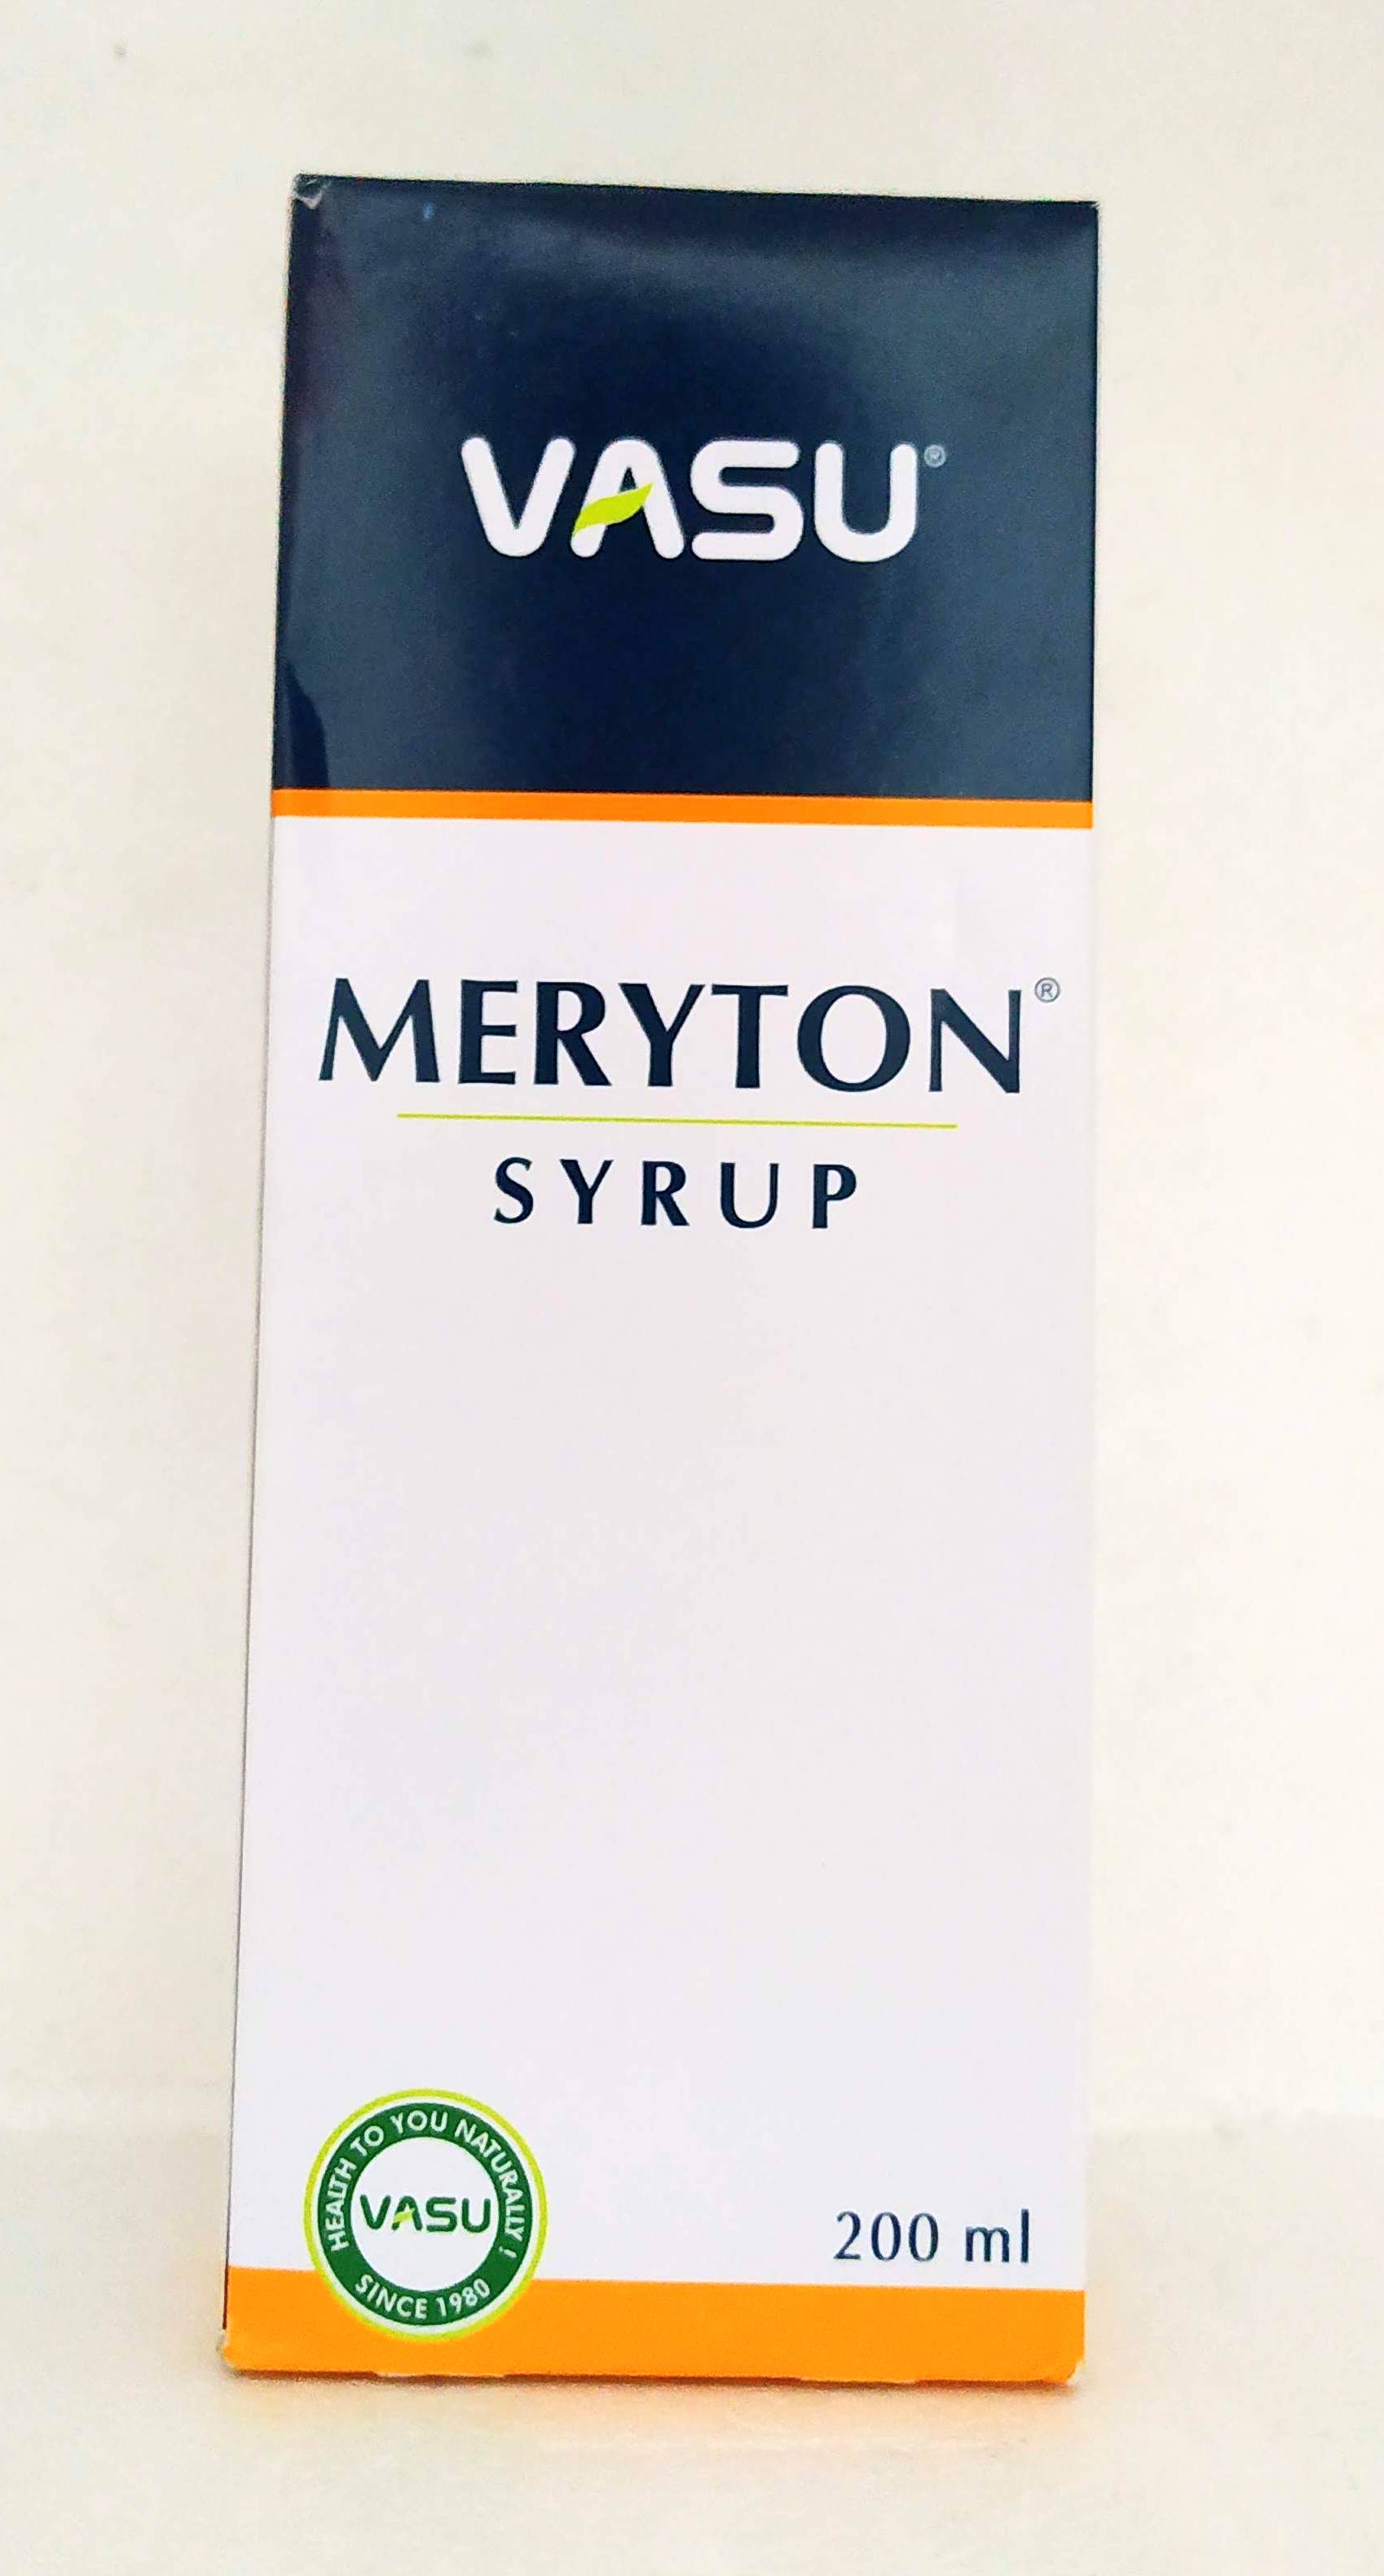 Shop Meryton Syrup 200ml at price 140.00 from Vasu herbals Online - Ayush Care